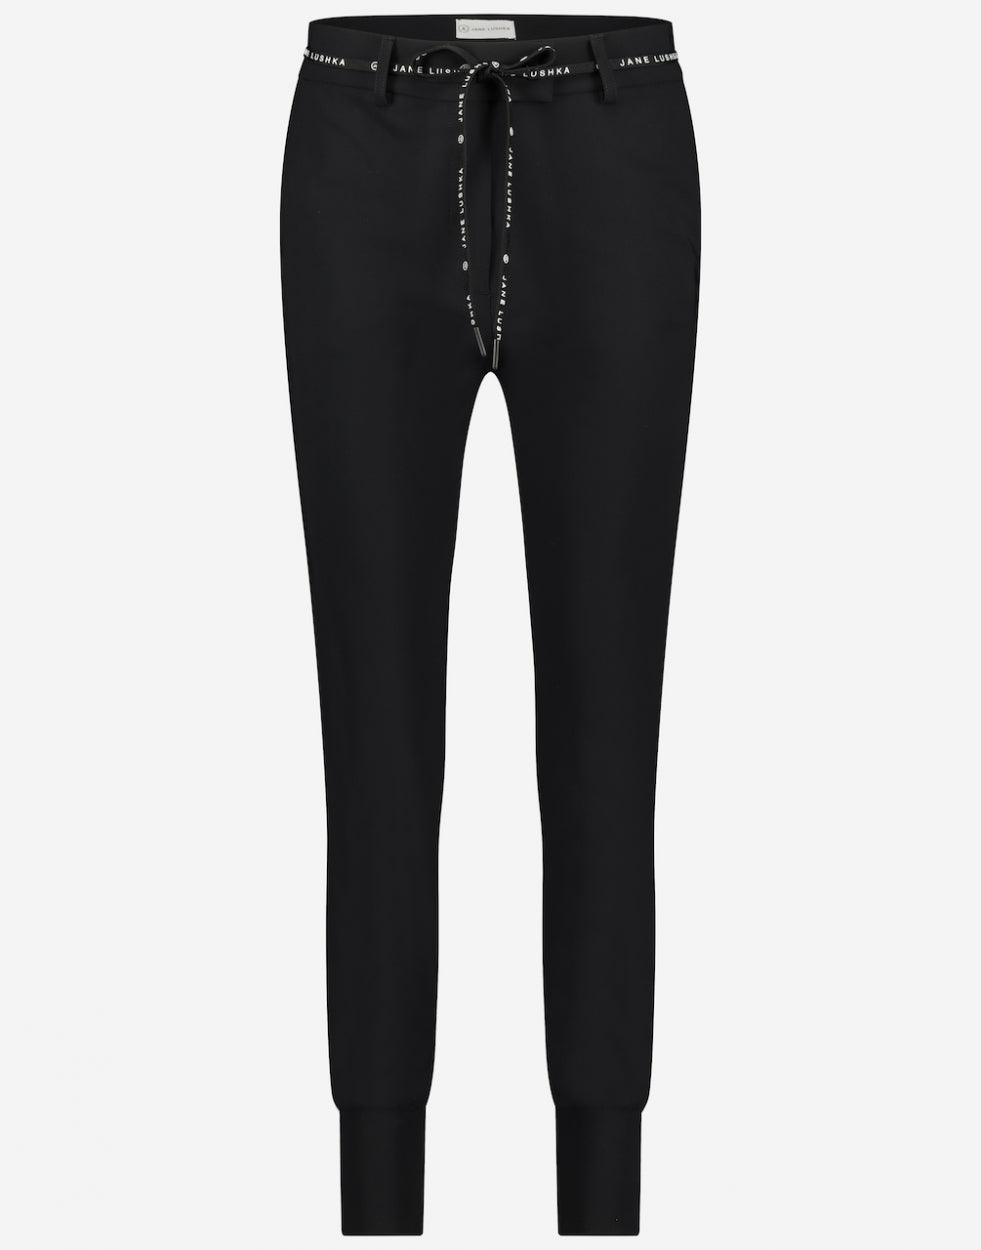 Pants Nicola Technical Jersey | Black